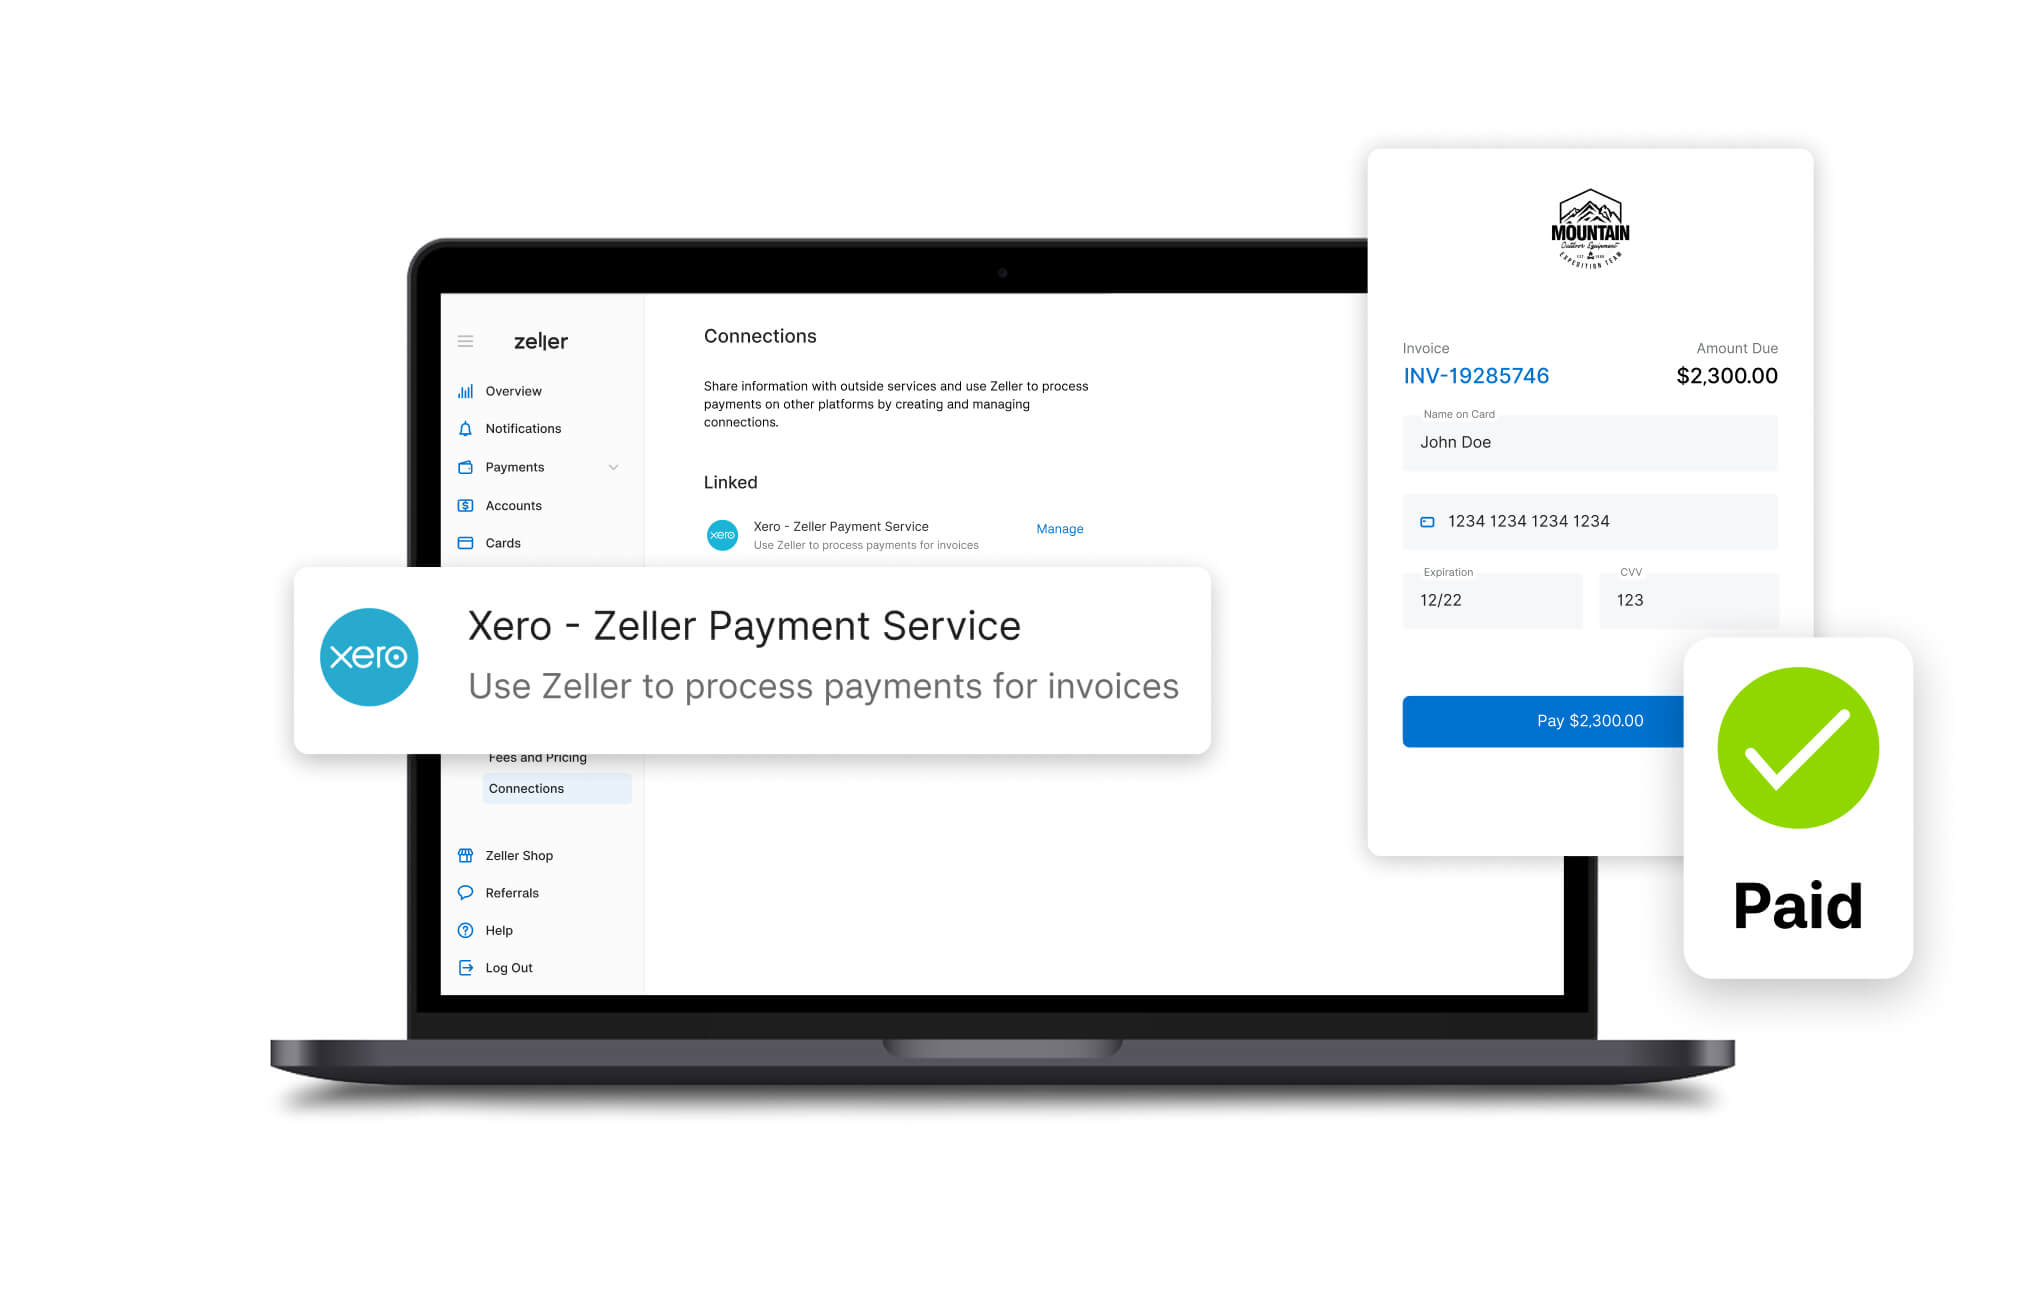 xero-zeller-payment-service-v4